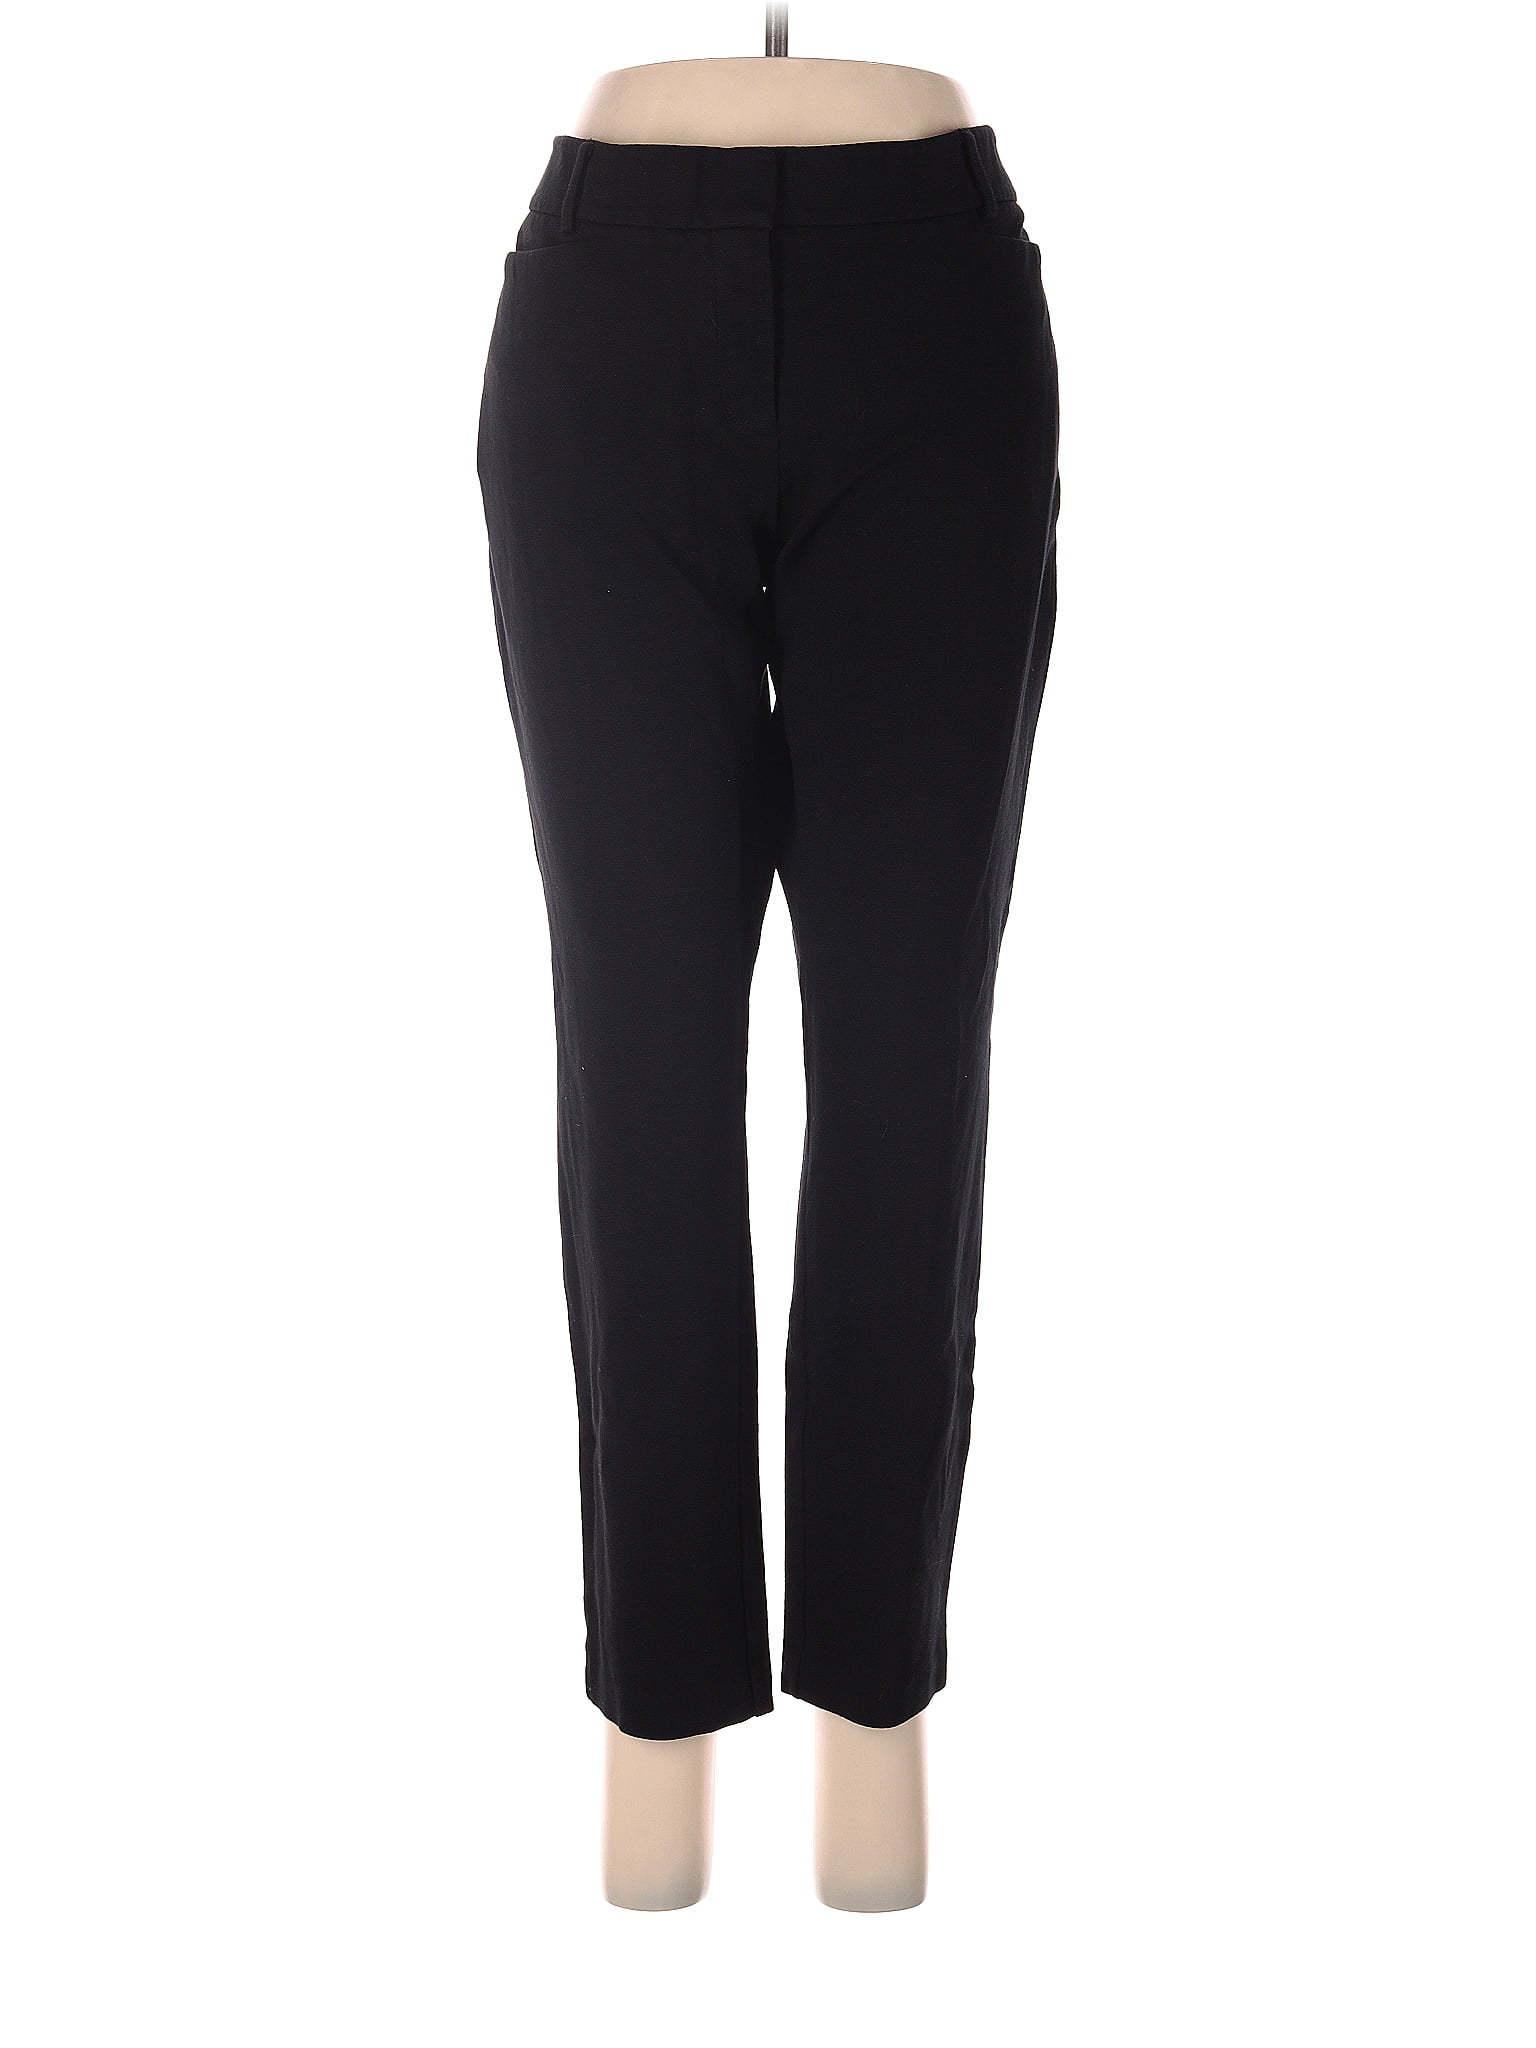 Zella Polka Dots Black Yoga Pants Size M - 61% off